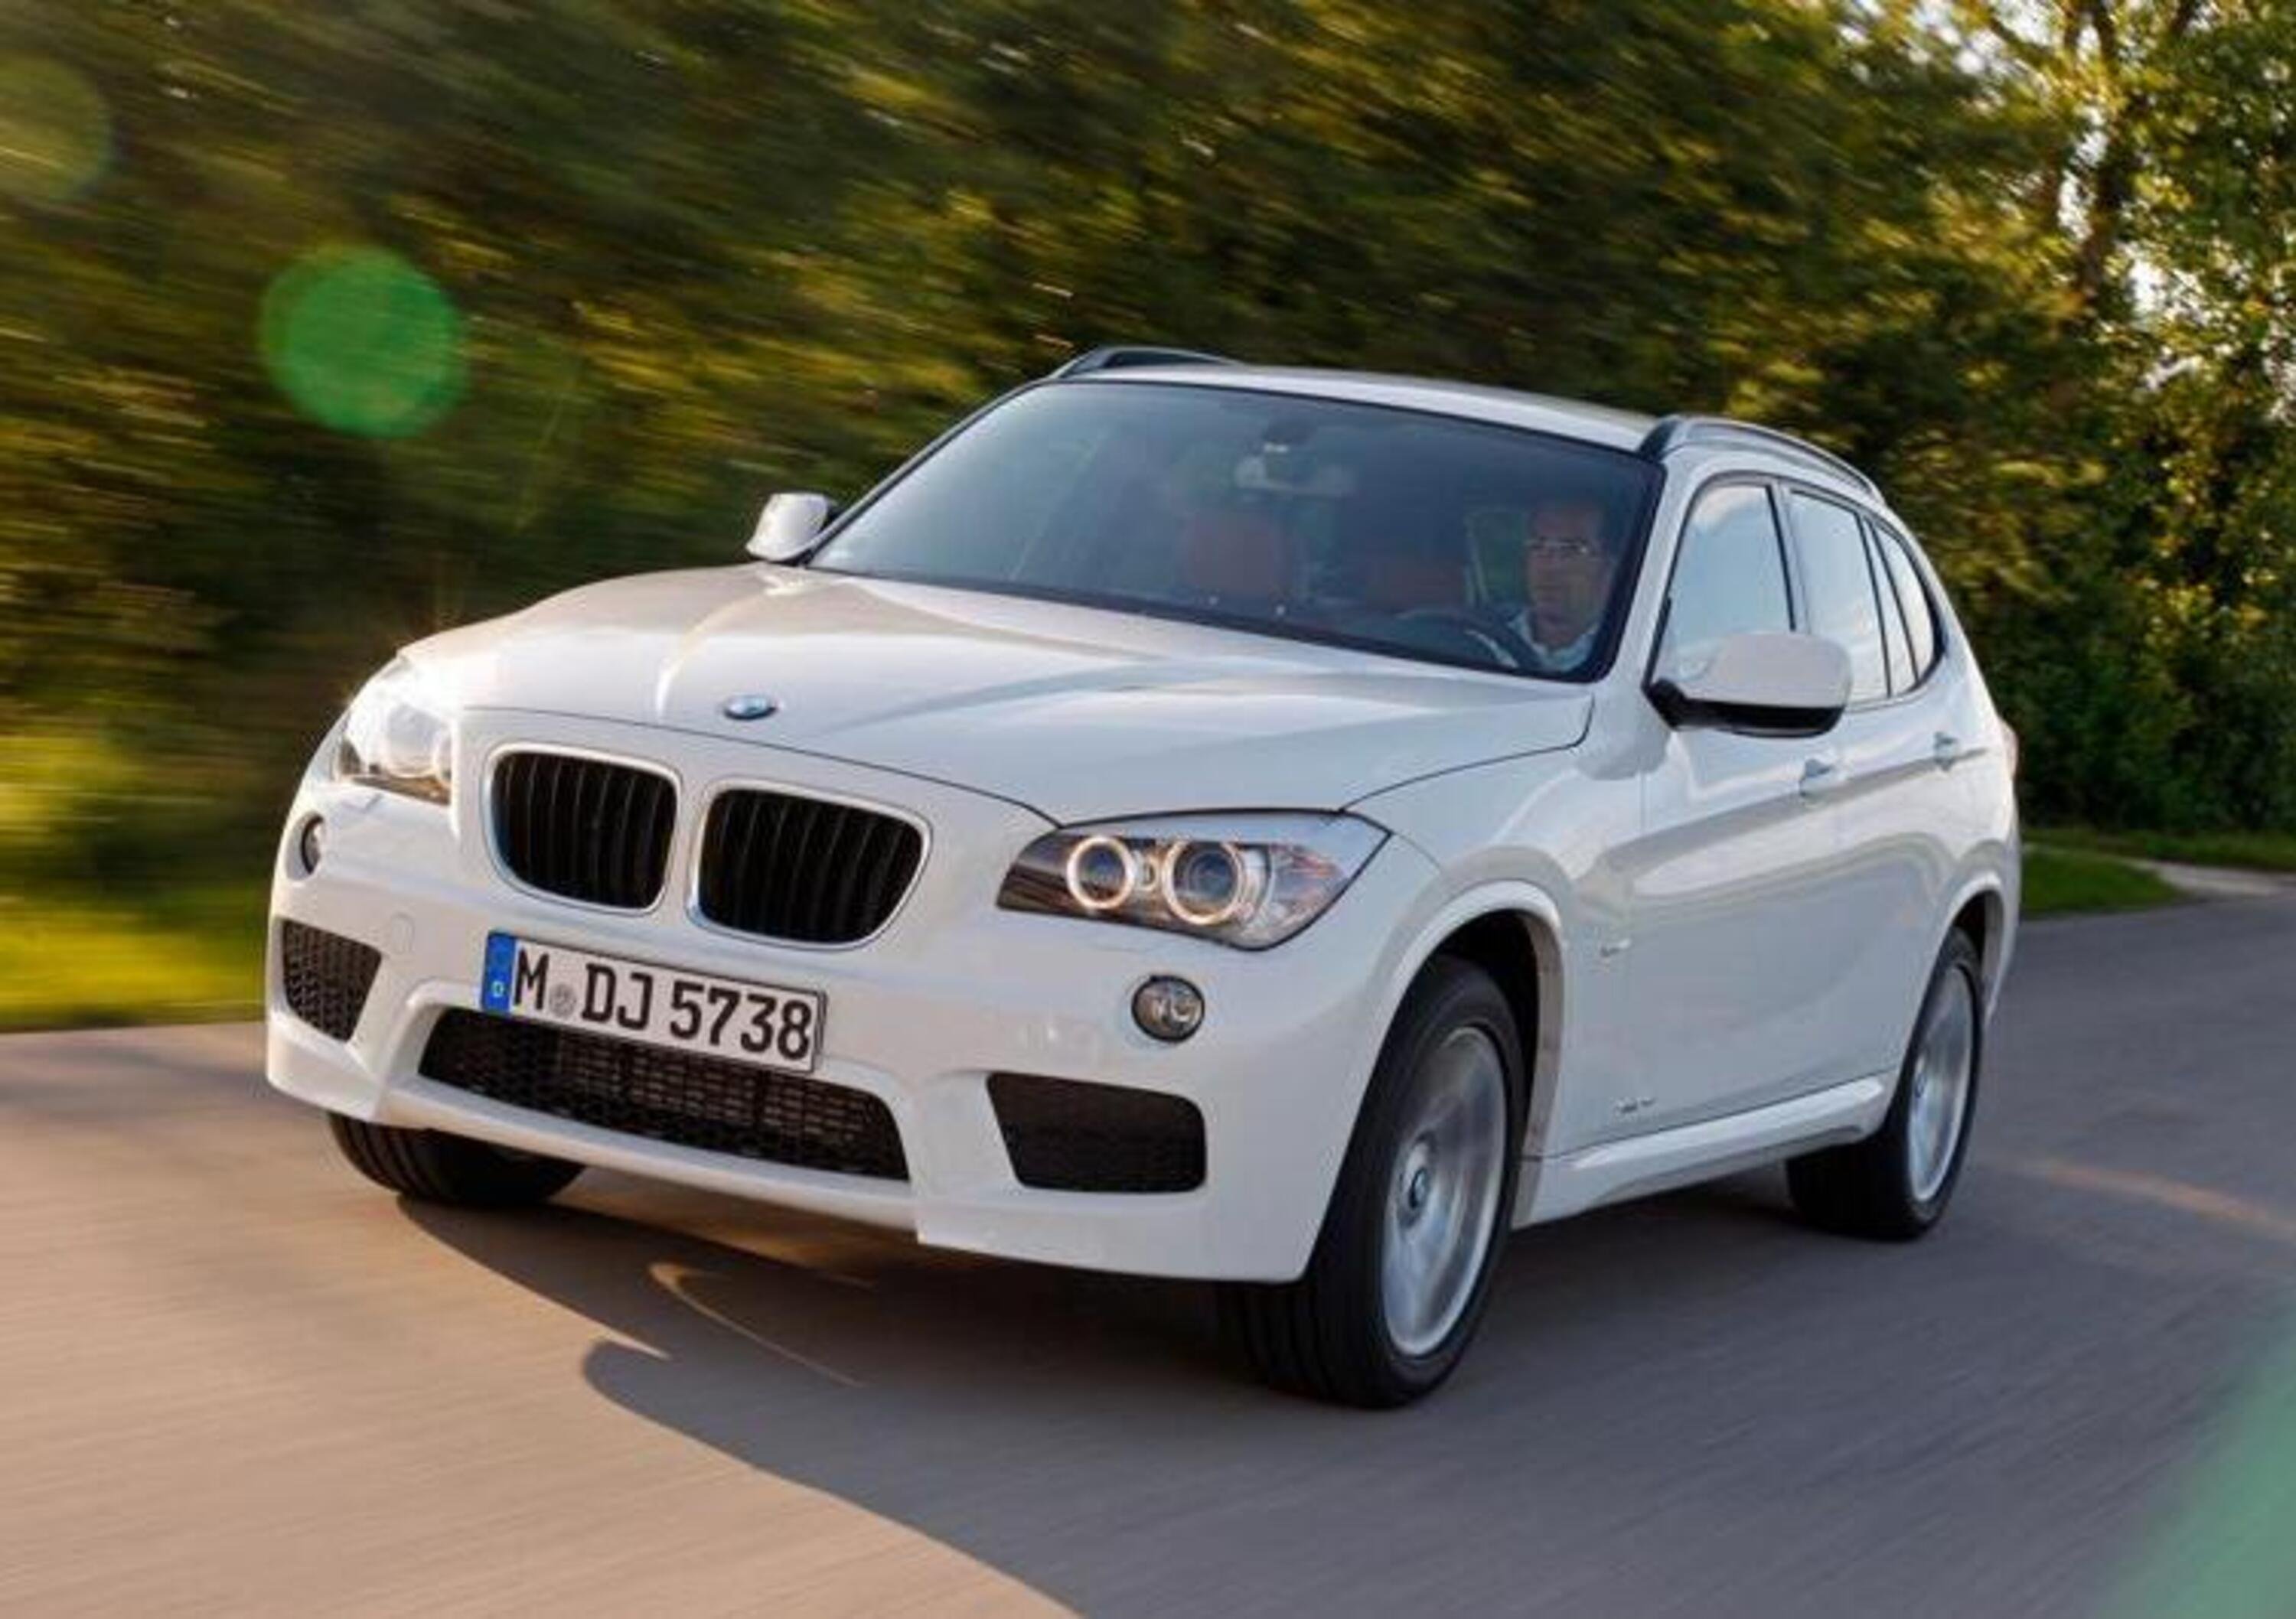 Eurotax: BMW X1 e Porsche Cayenne i SUV meno svalutati a ottobre